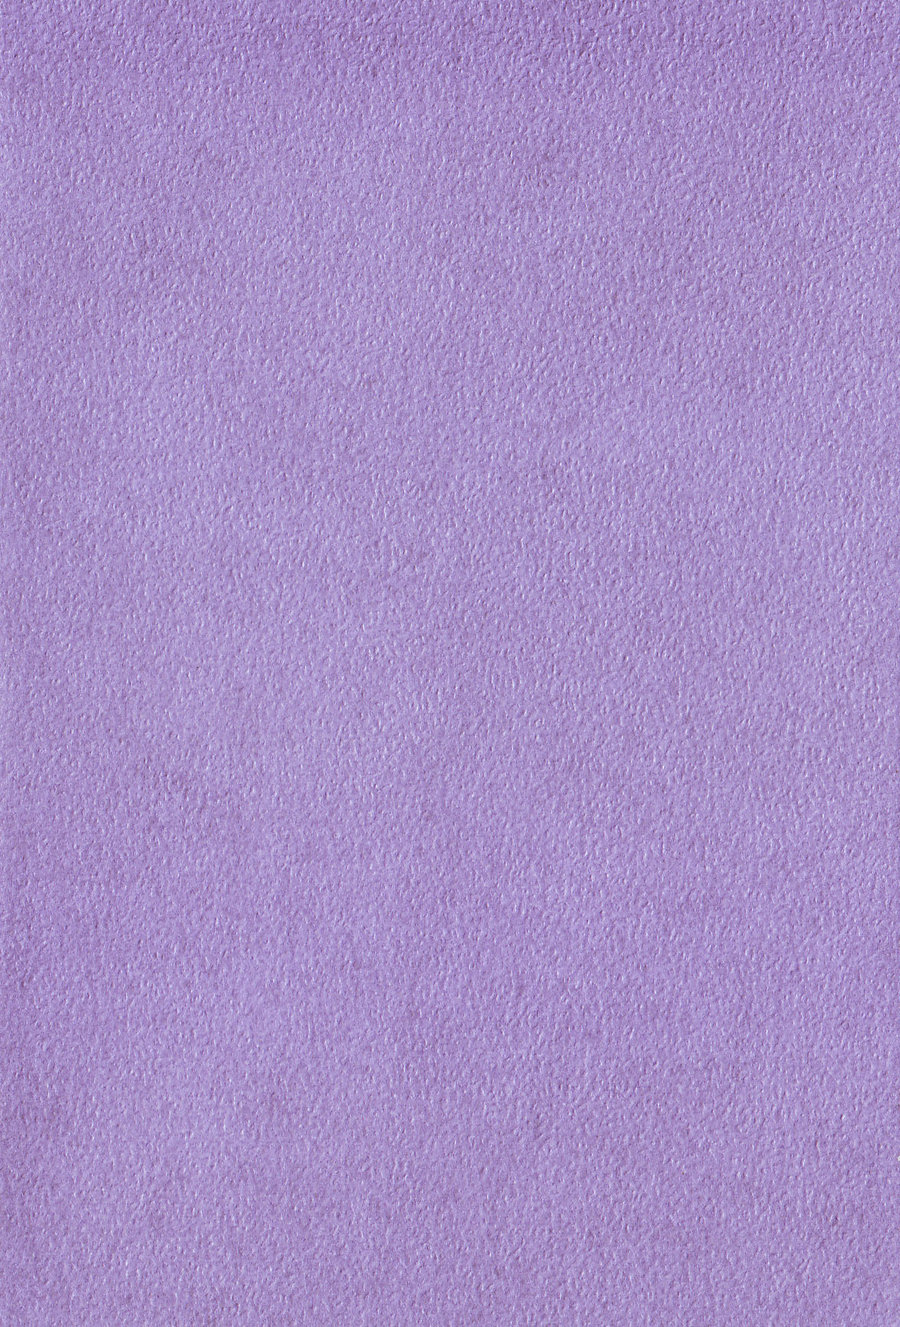 Wallpaper Lilac by tamaraR stock